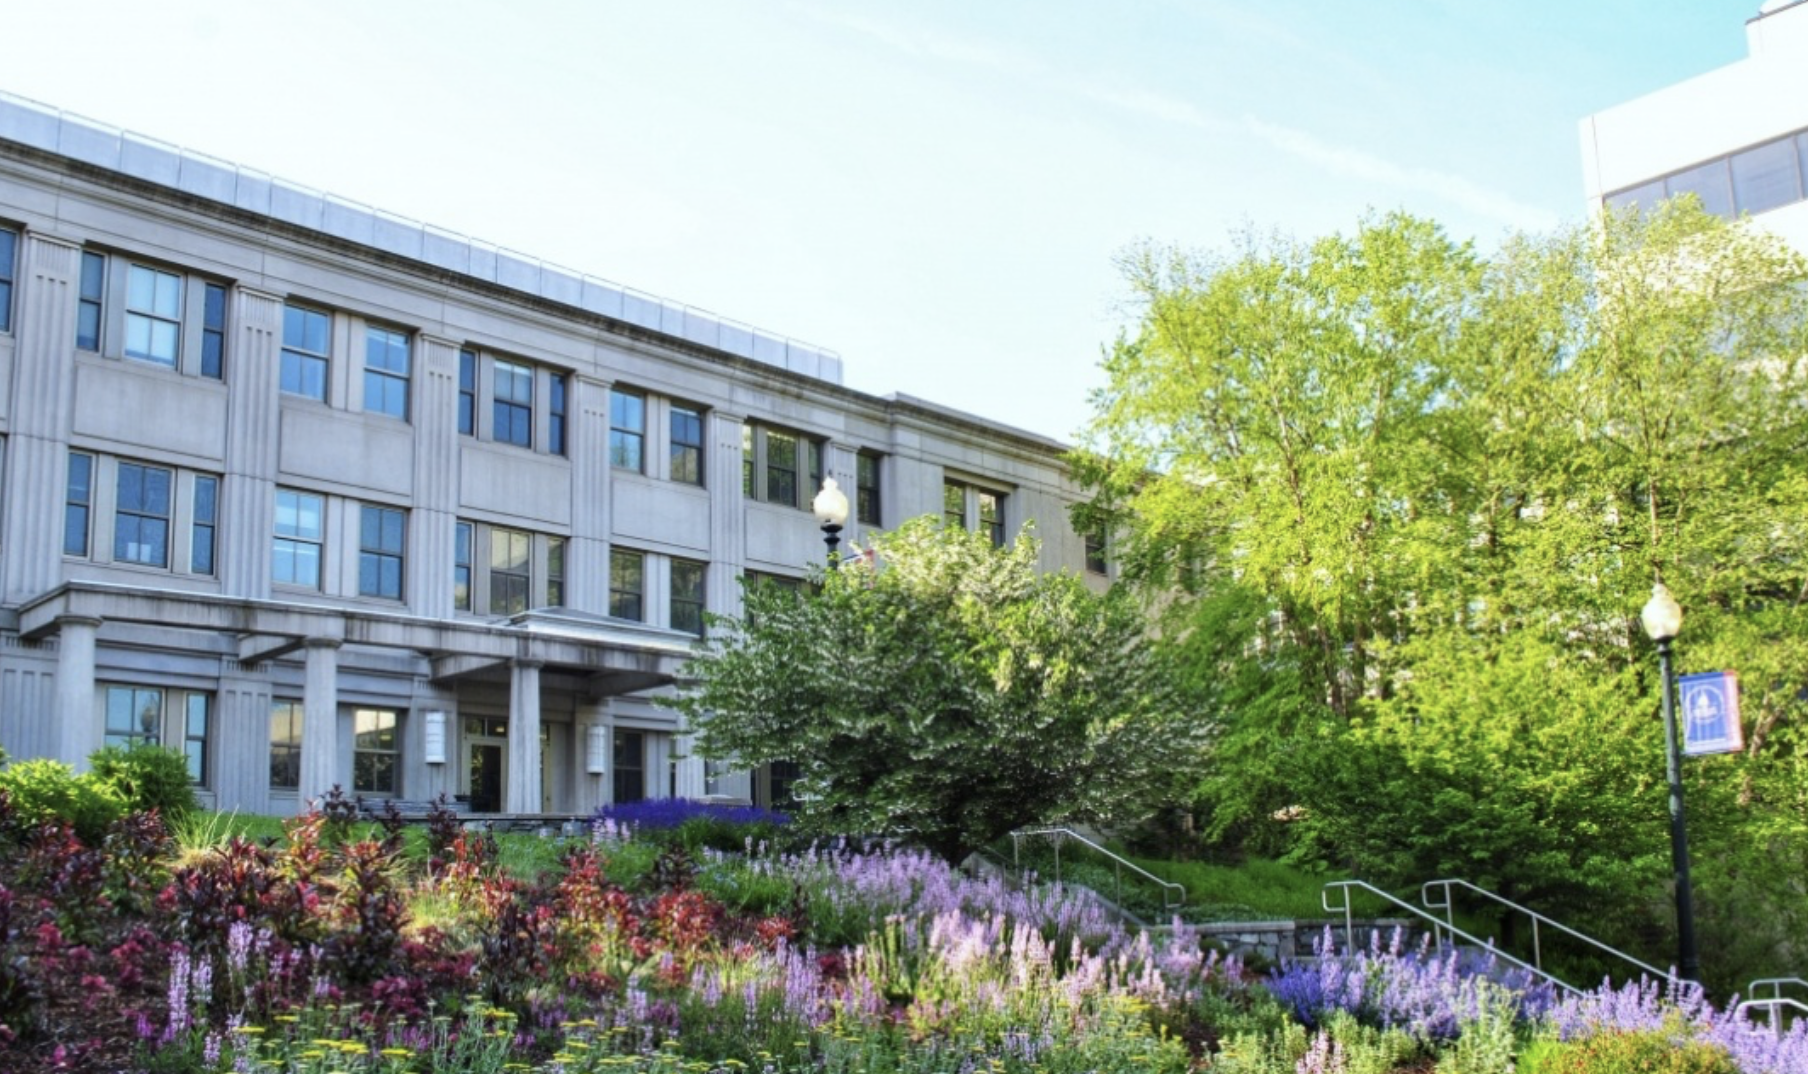 Exterior image of American University in Washington, D.C.